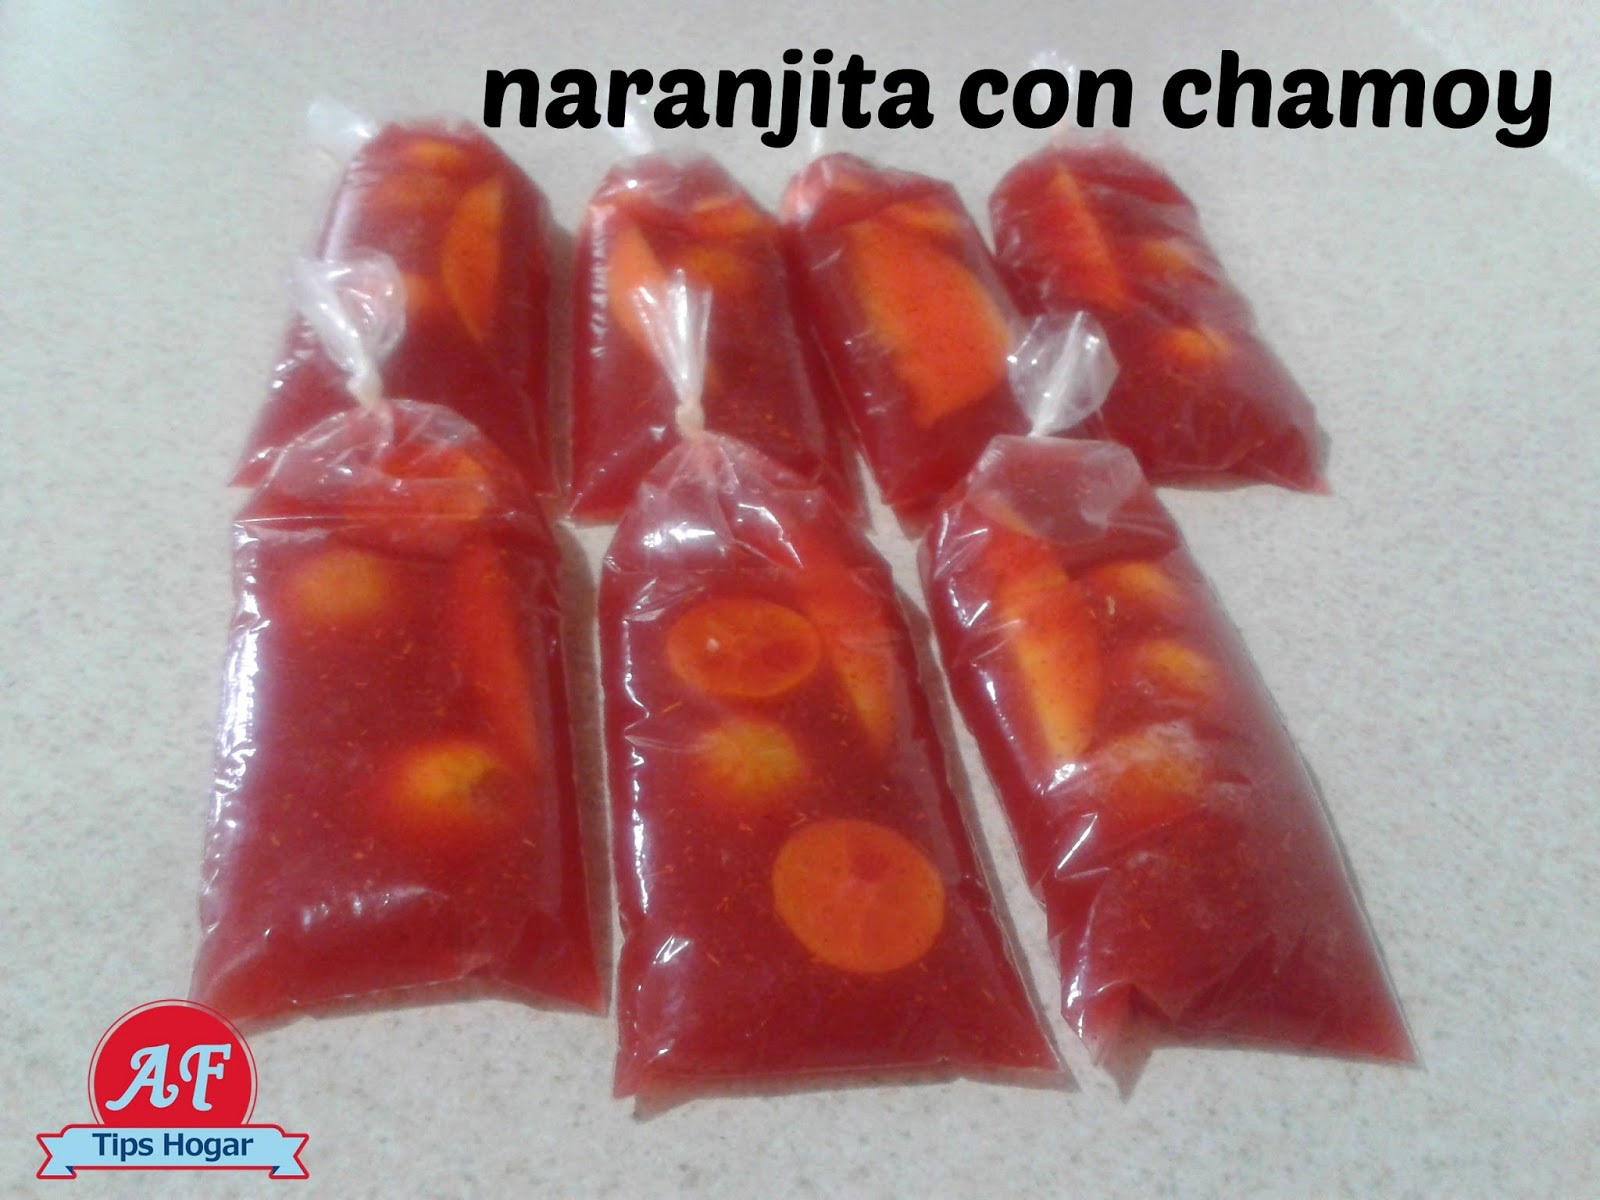 helados de naranjita con chamoy